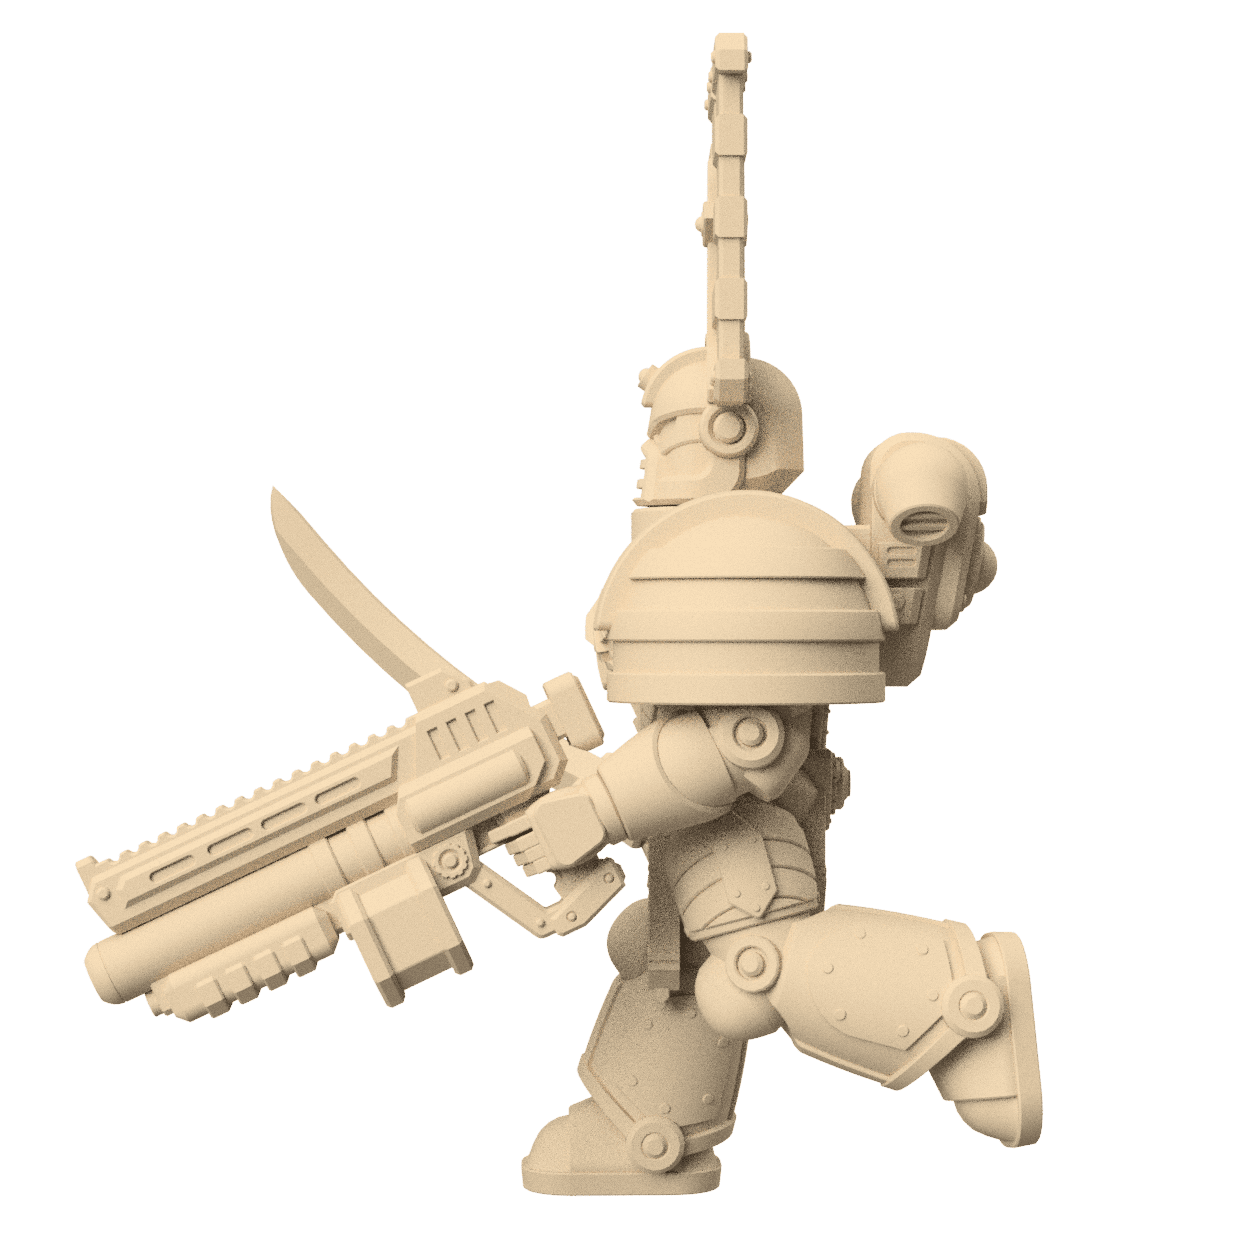 Modular 3D Printable Dune Raiser Leader Miniature for Wargaming - Customizable Tabletop Game Figure 3d model